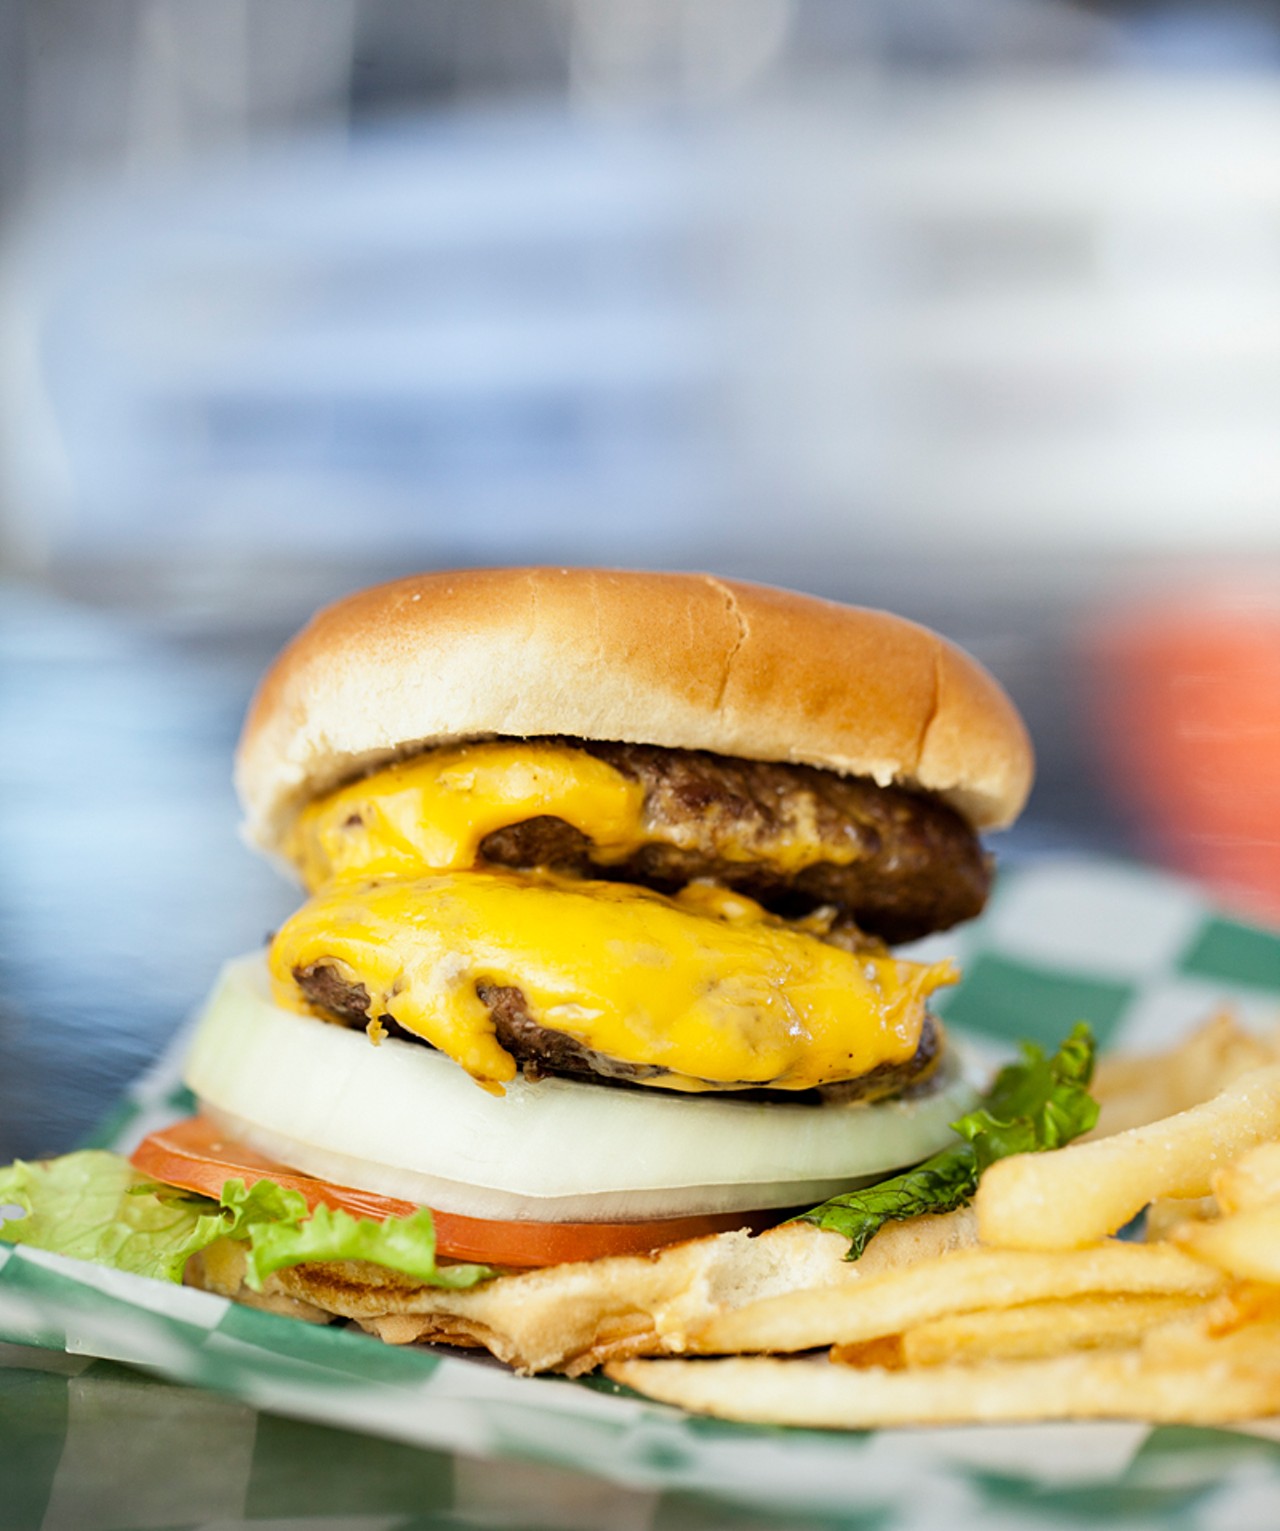 Joe's "Super Double Cheeseburger" comes stacked with double cheese, double burger, onions, lettuce and tomato.